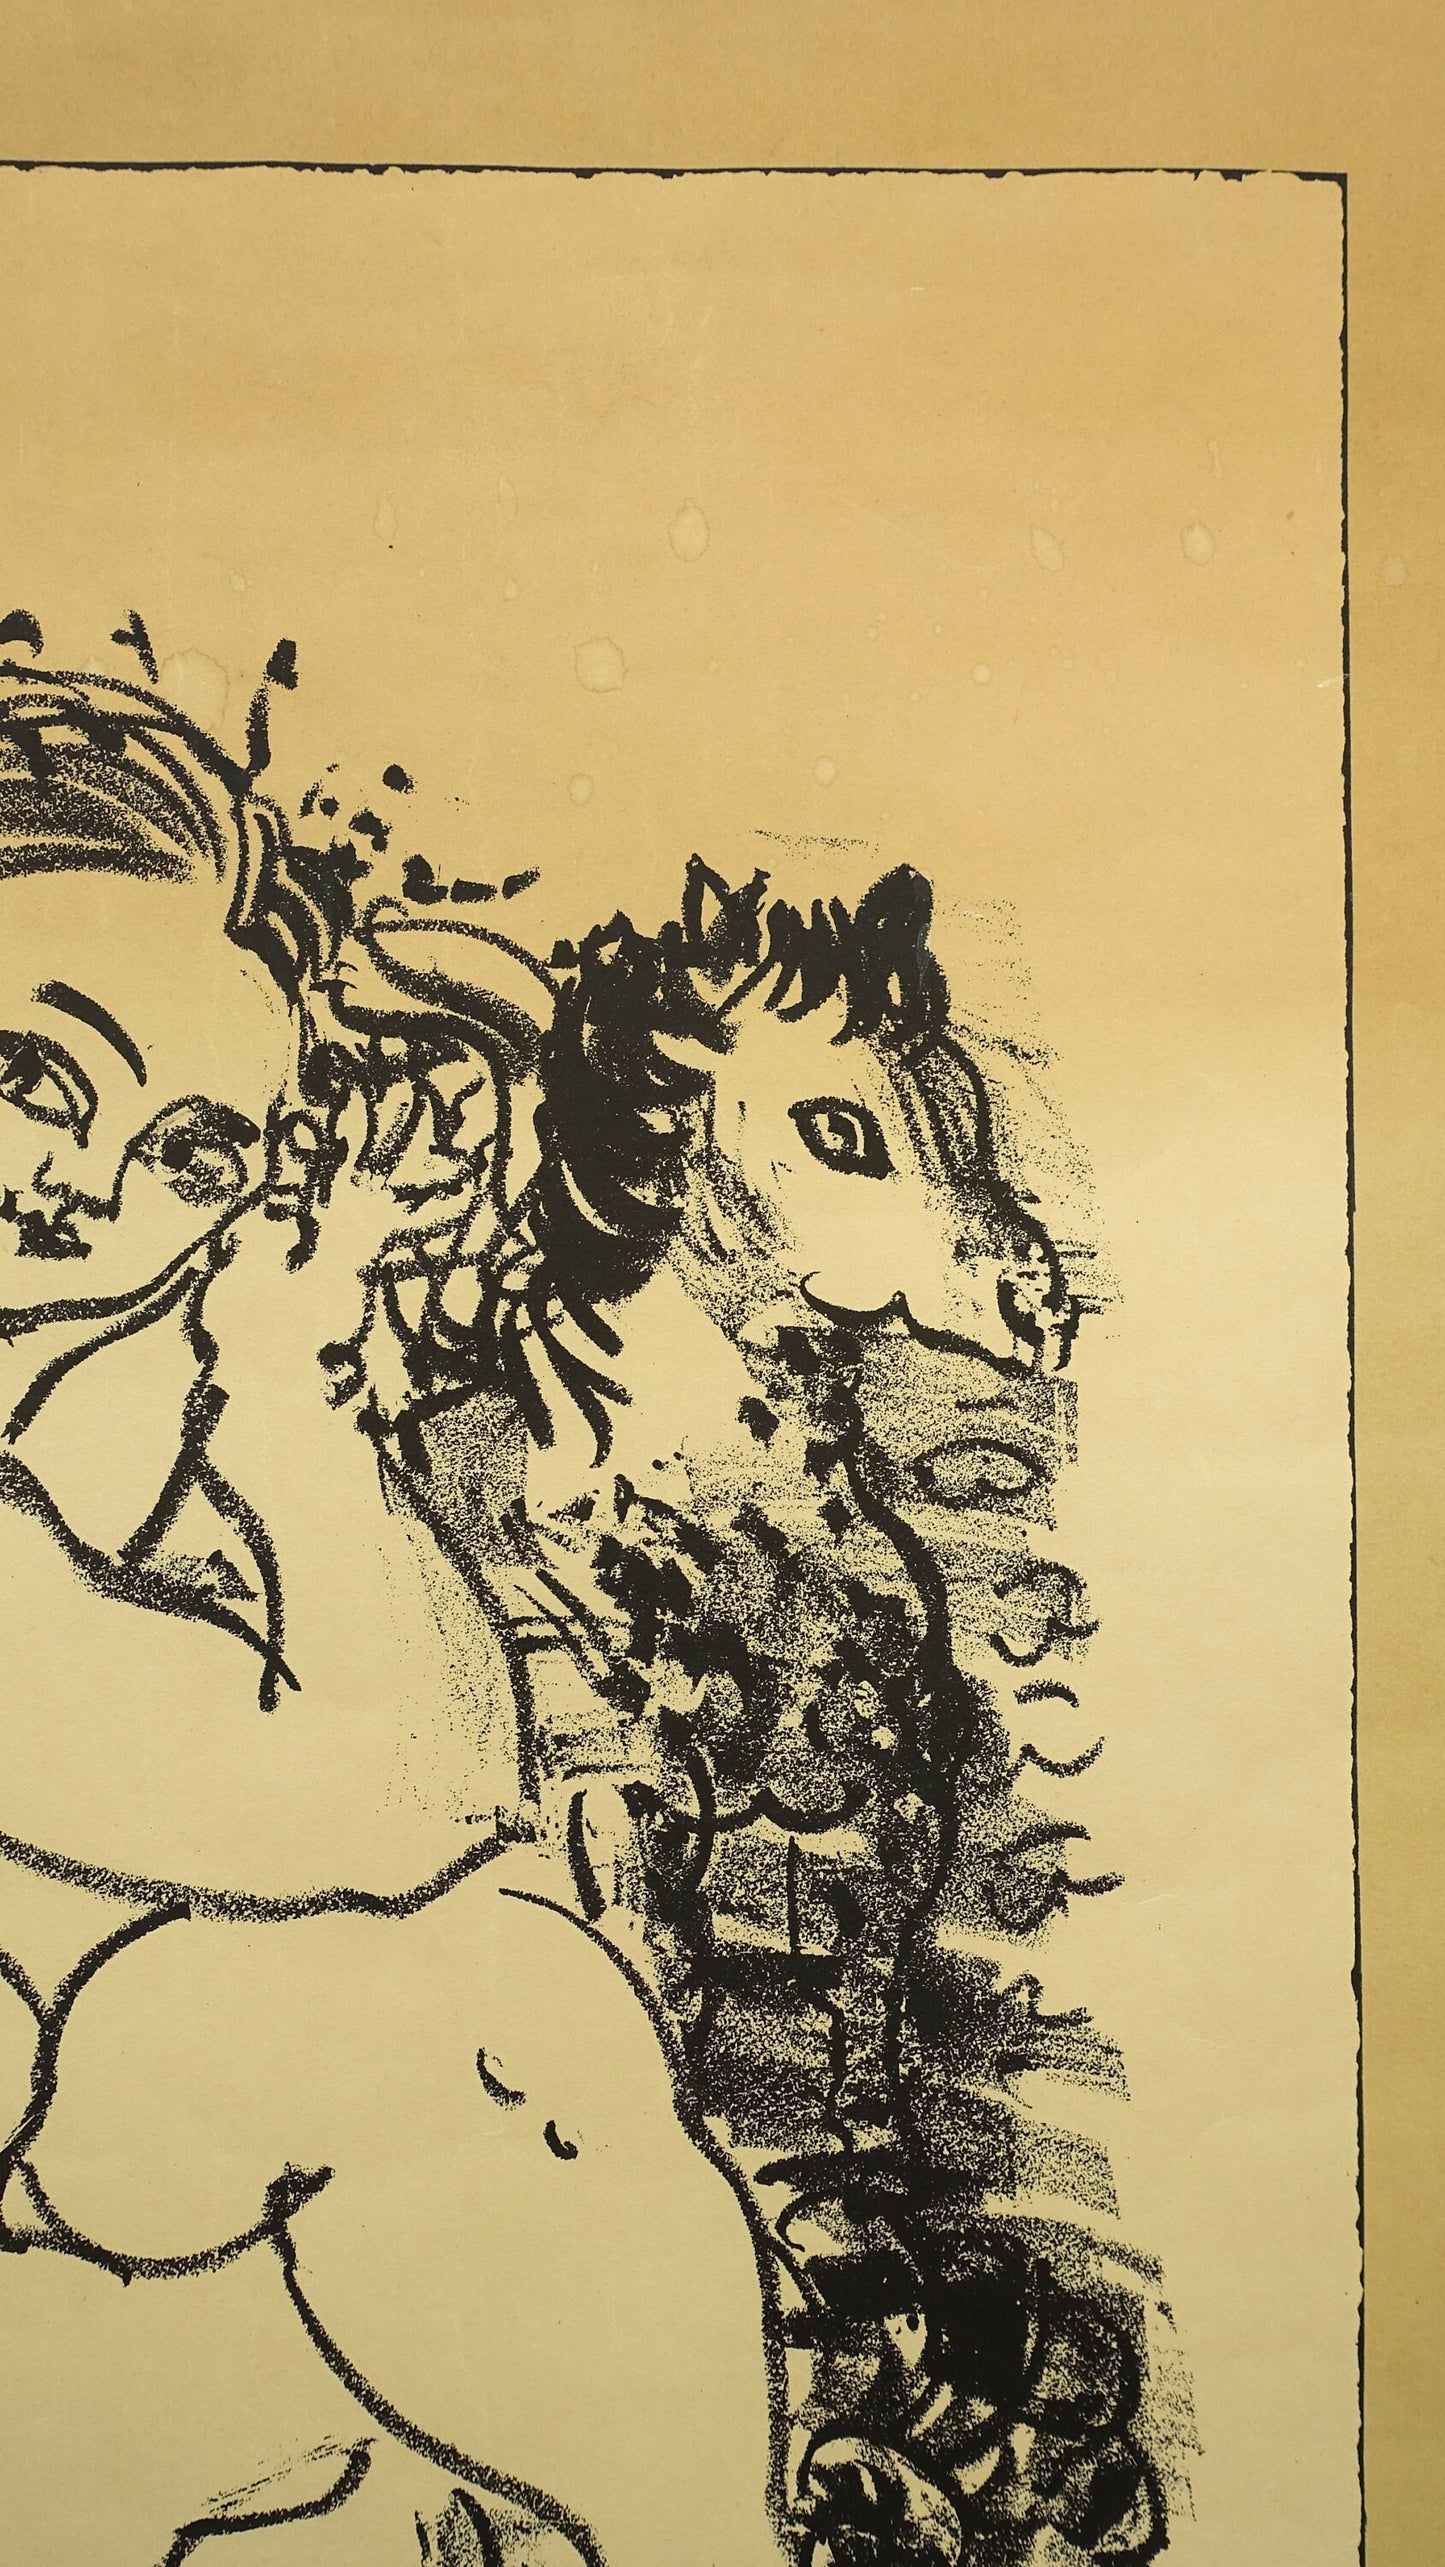 1953 Raoul Dufy Art Exhibition Poster - Original Vintage Poster